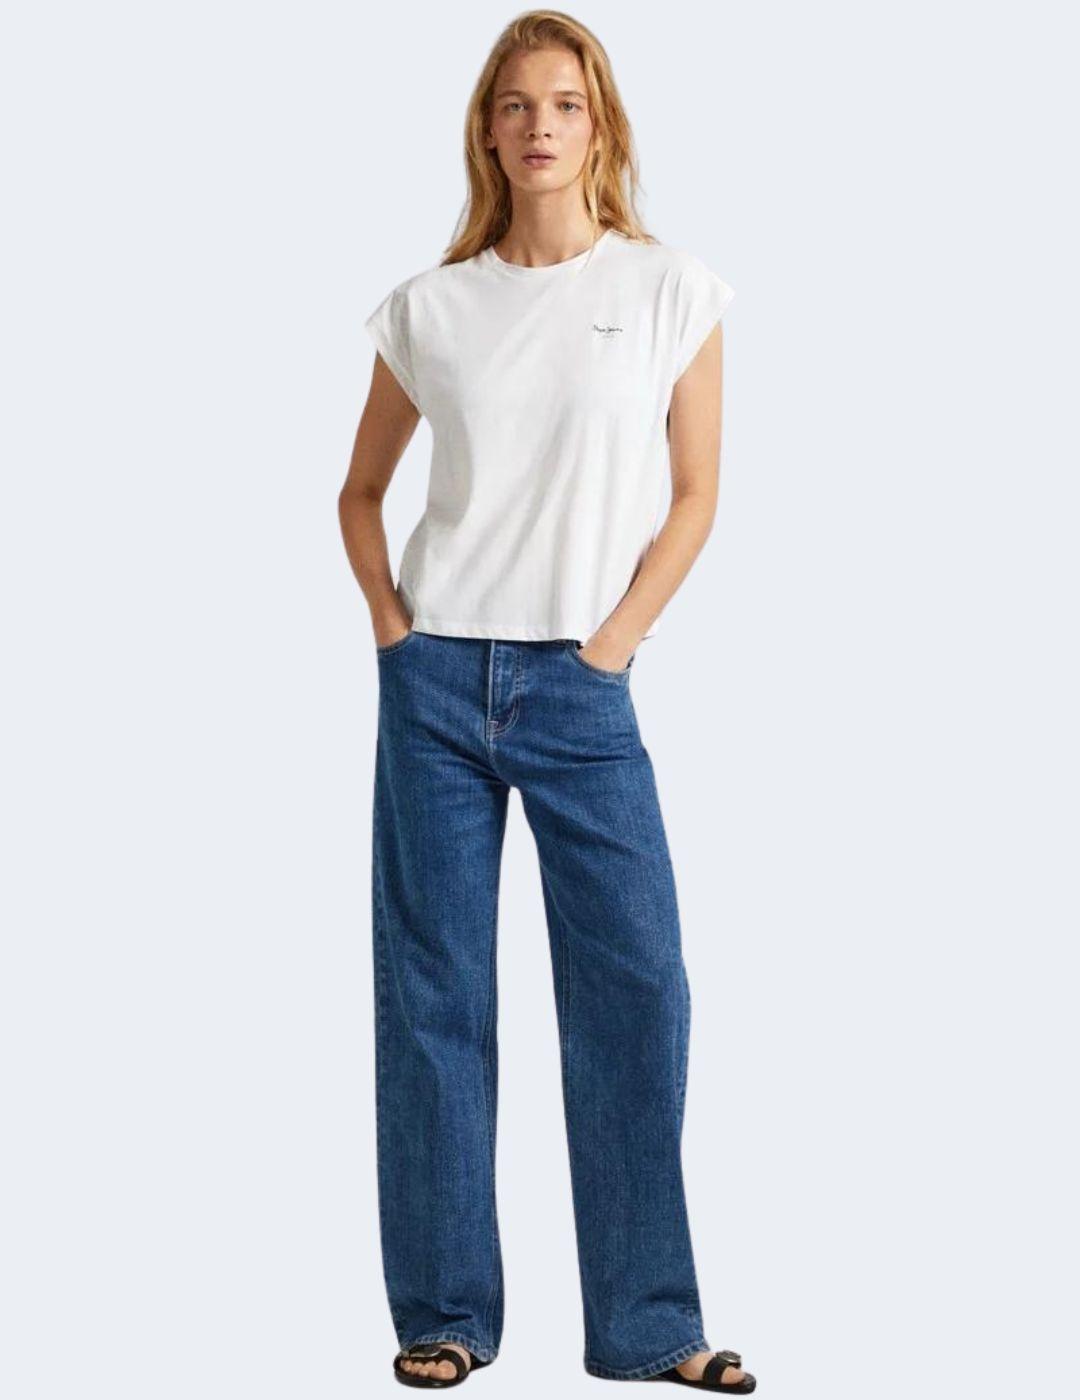 Camiseta Pepe Jeans Mujer Lory Blanco